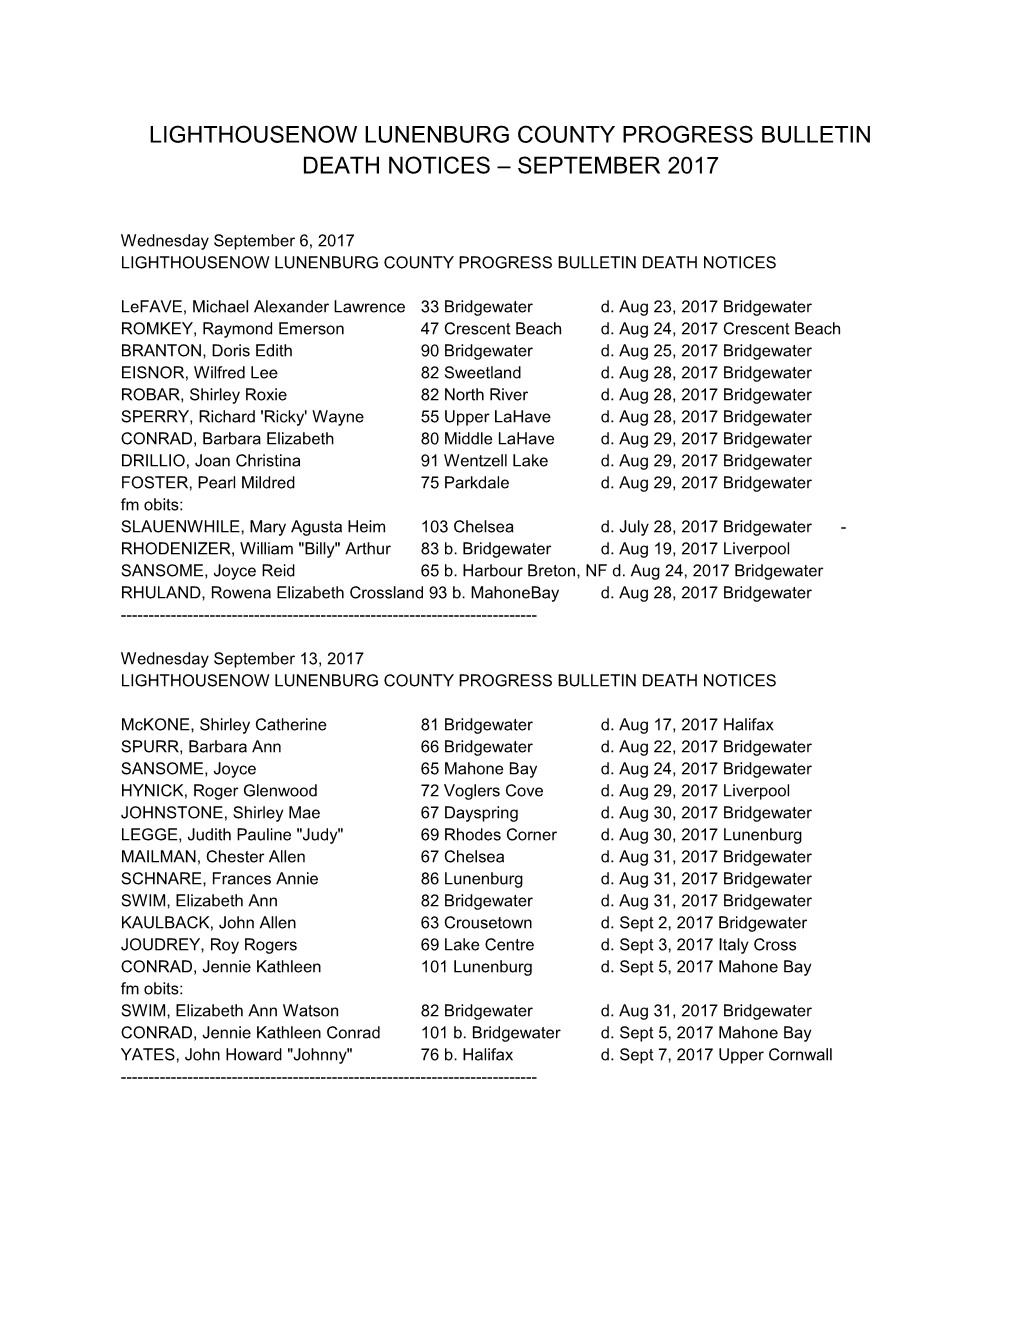 Lighthousenow Lunenburg County Progress Bulletin Death Notices